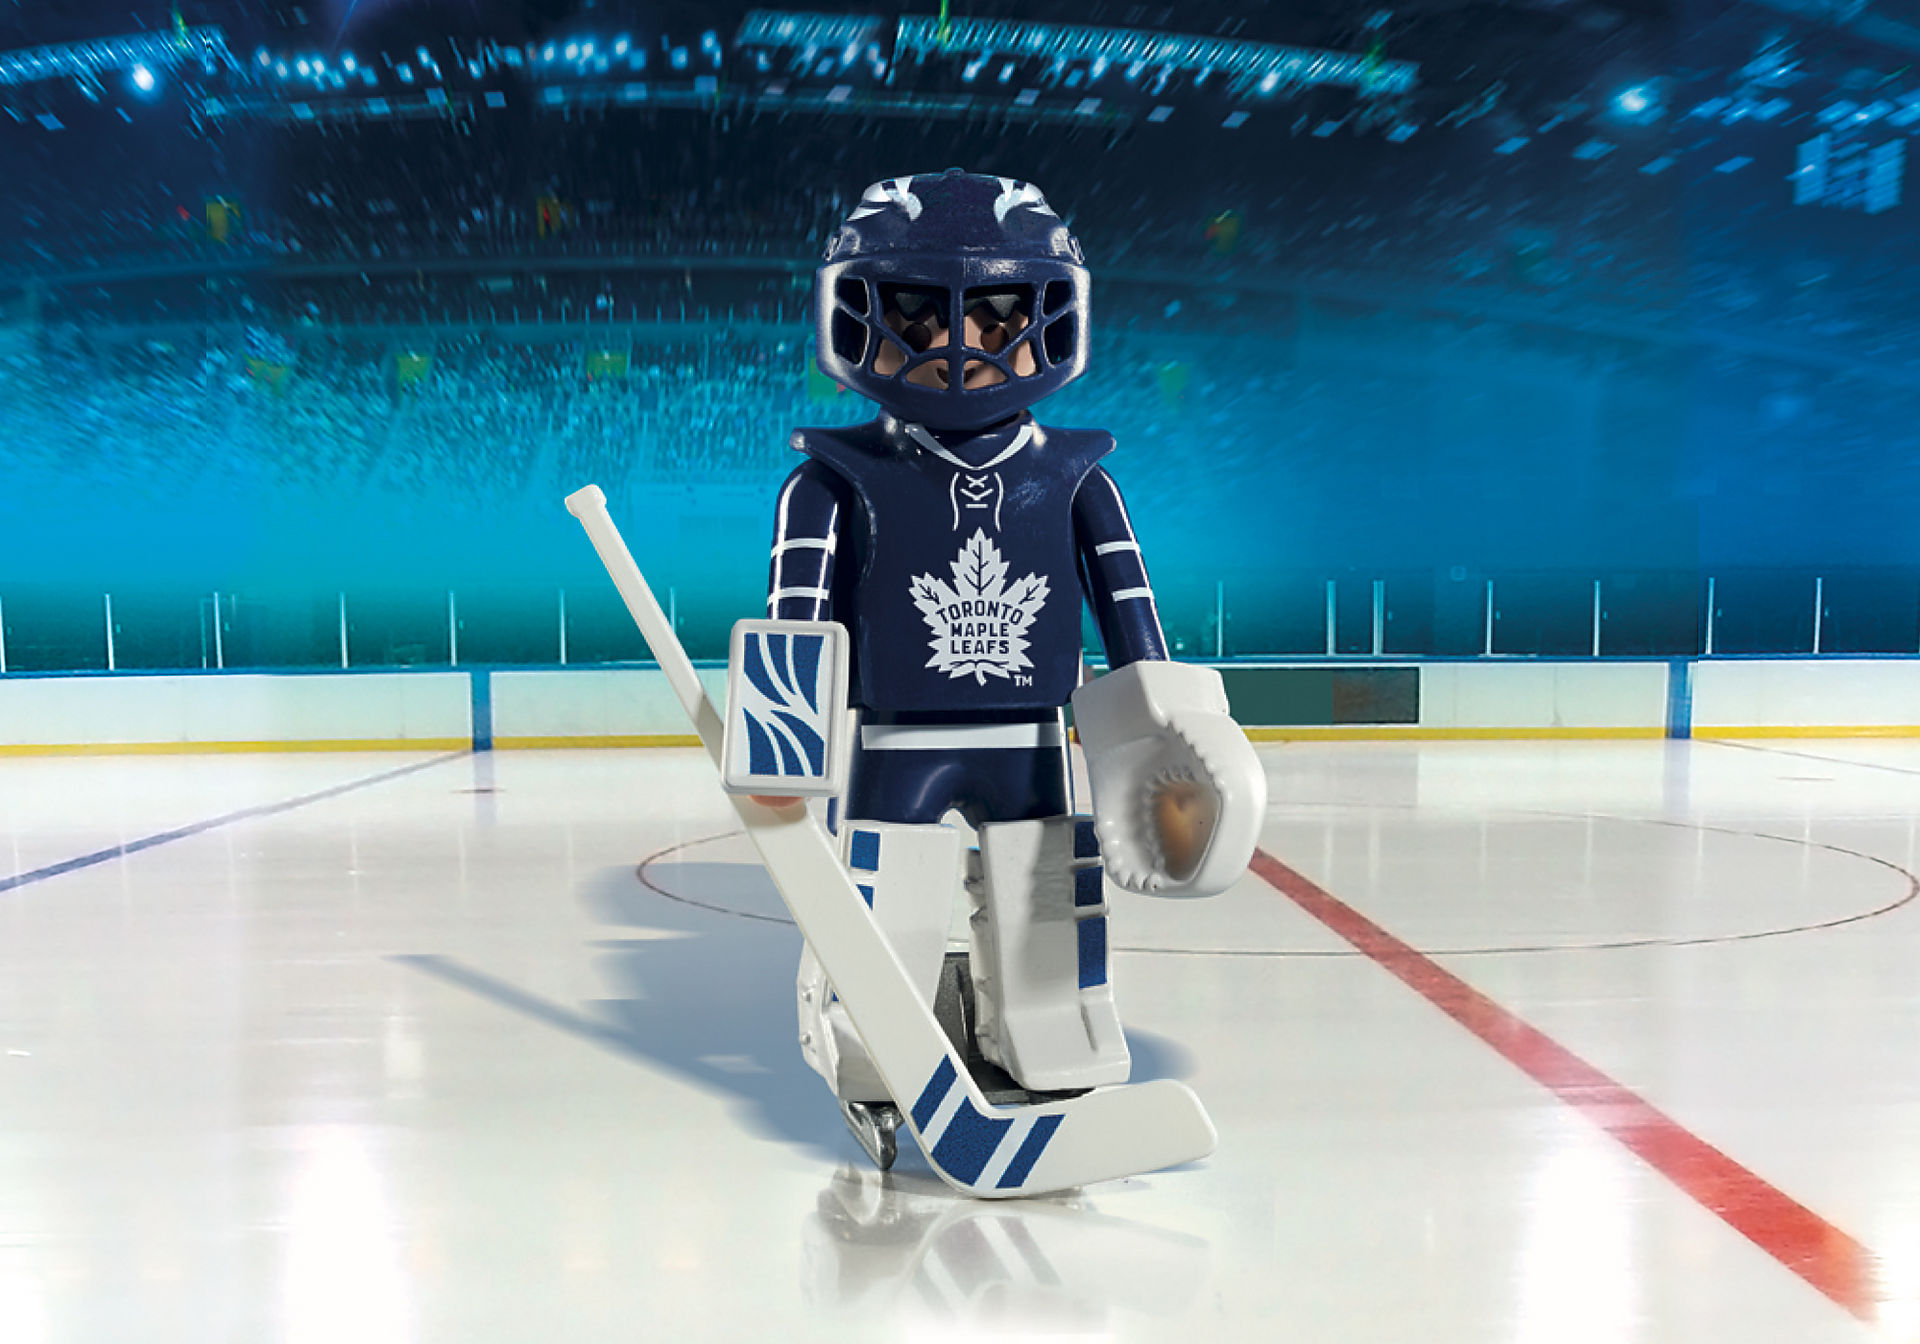 5083 NHL™ Toronto Maple Leafs™ Goalie zoom image1